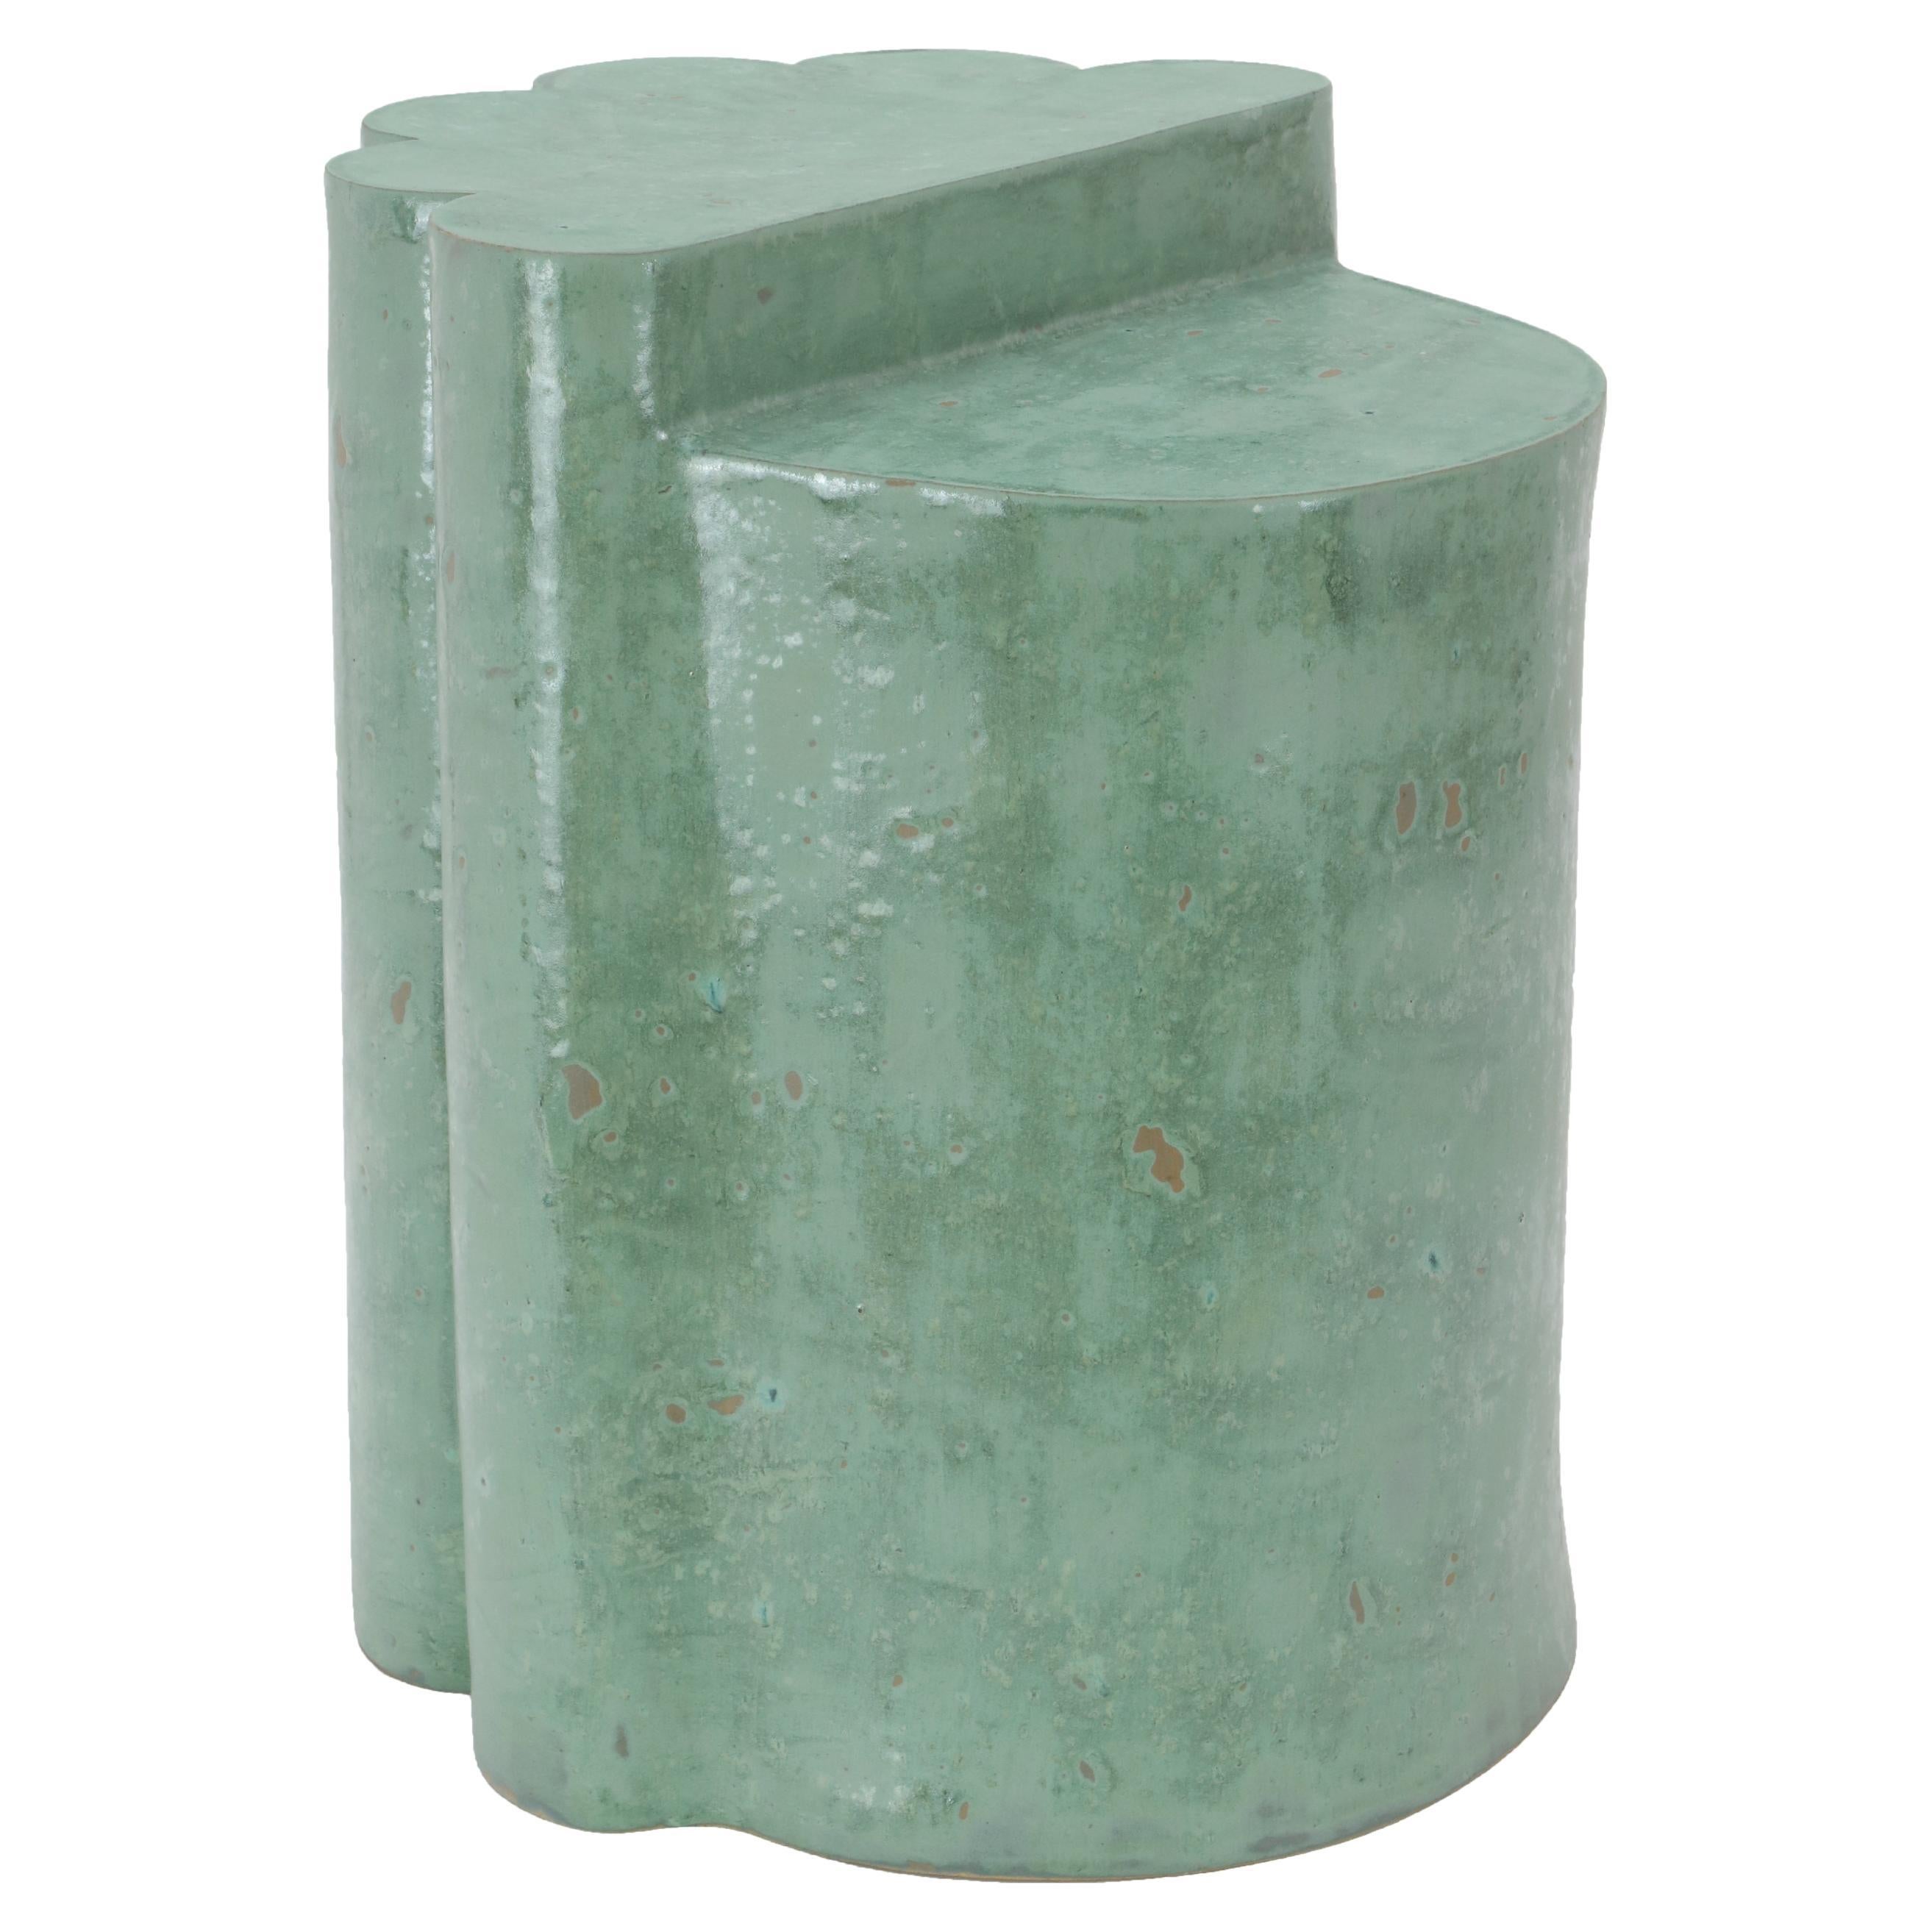 Ceramic Ledge Side Table & Stool in Jade by BZIPPY For Sale